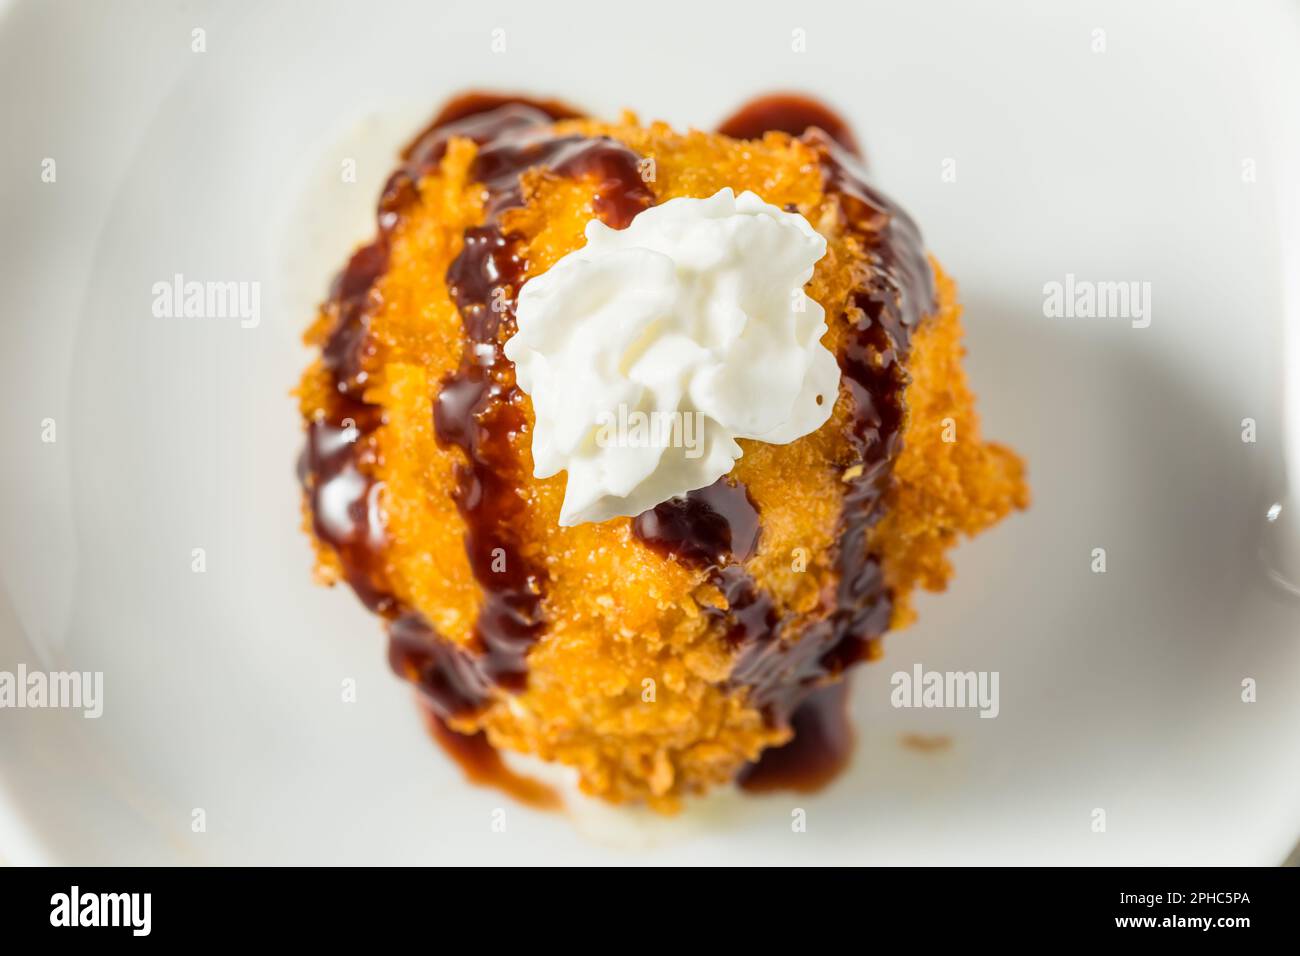 Homemade Fried IceCream Dessert with Chocolate and Whipped Cream Stock Photo